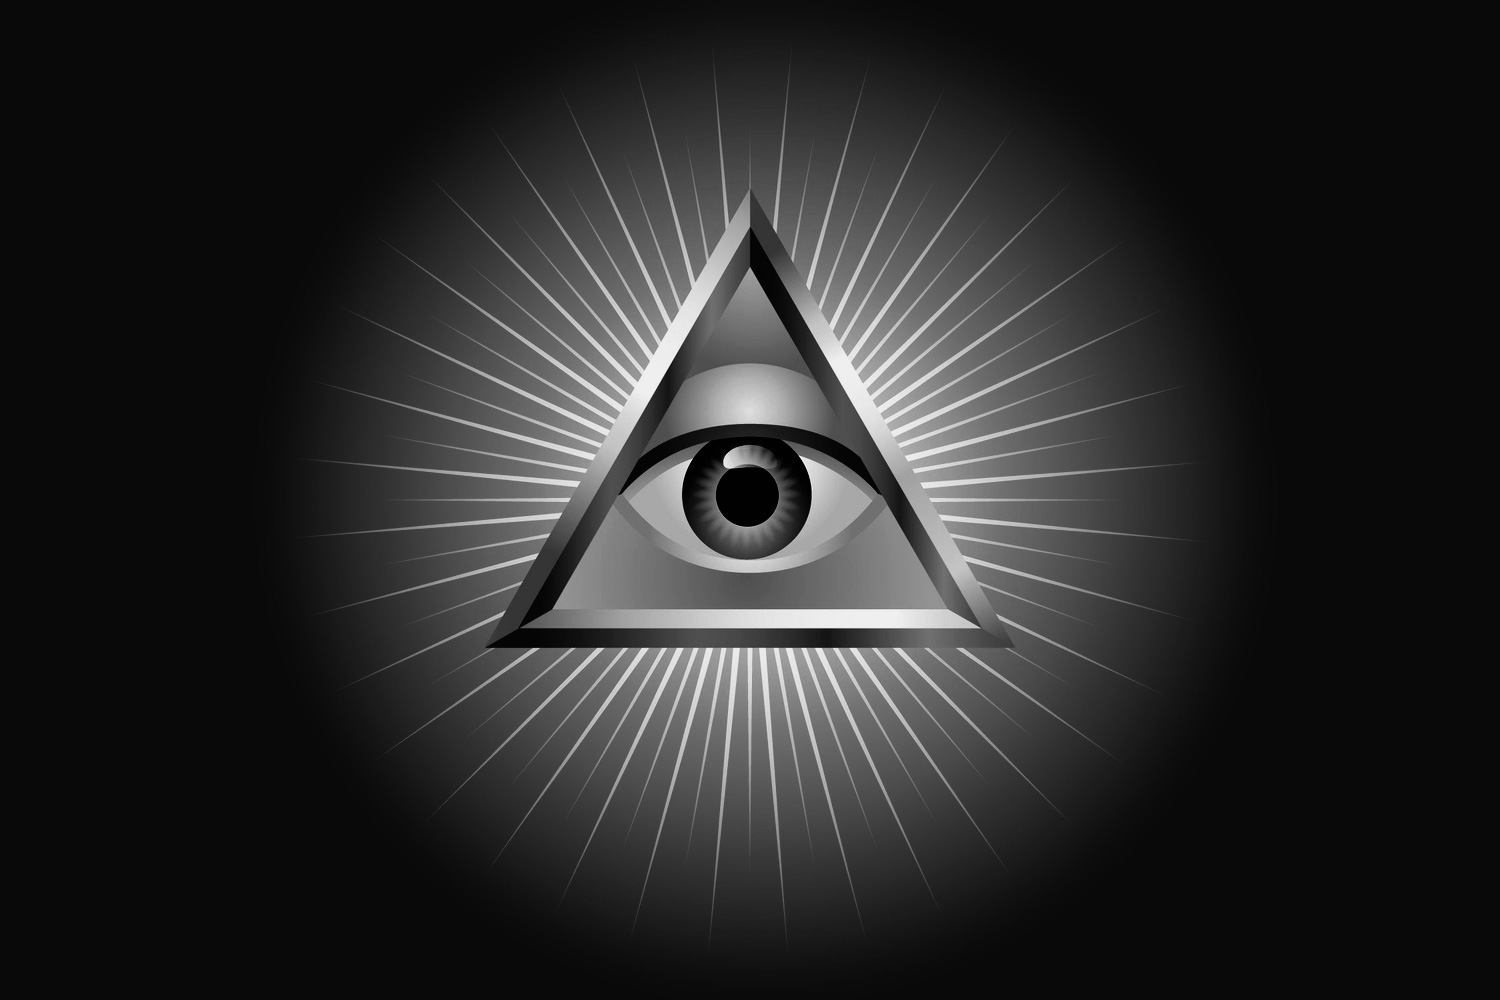 An all-seeing eye inside a creepy triangle